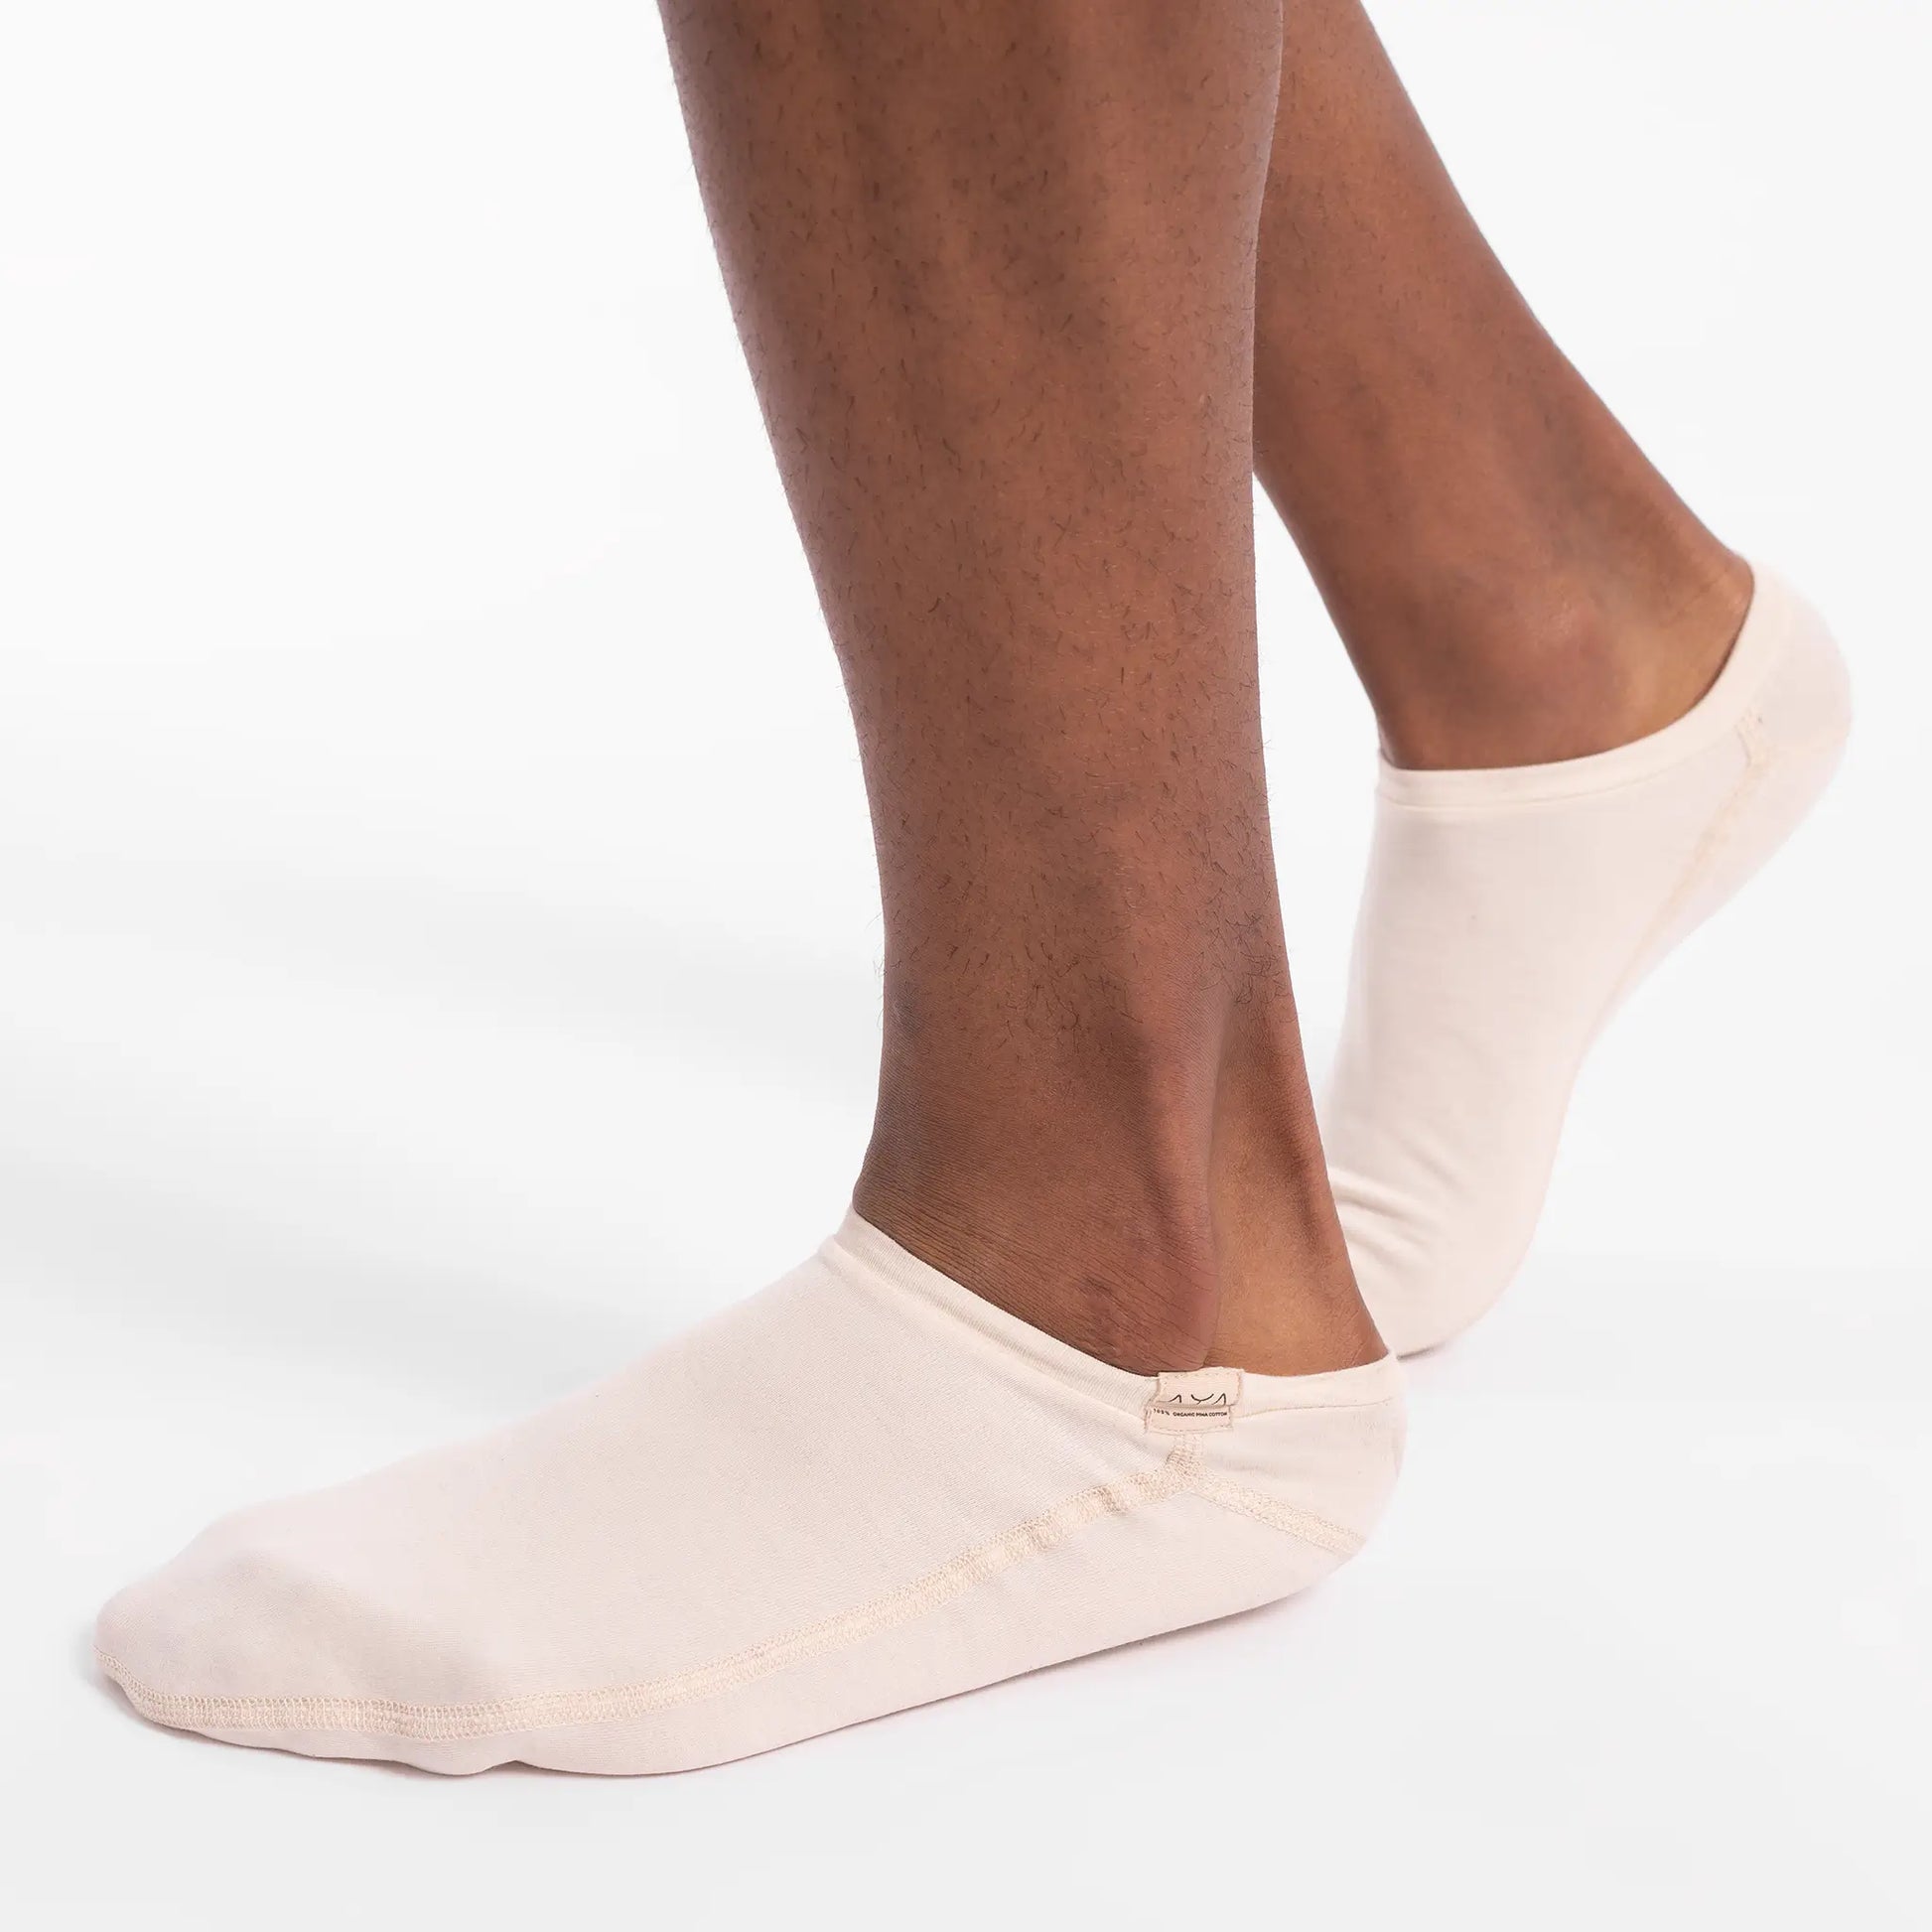 unisex slipper socks natural fiber color undyed